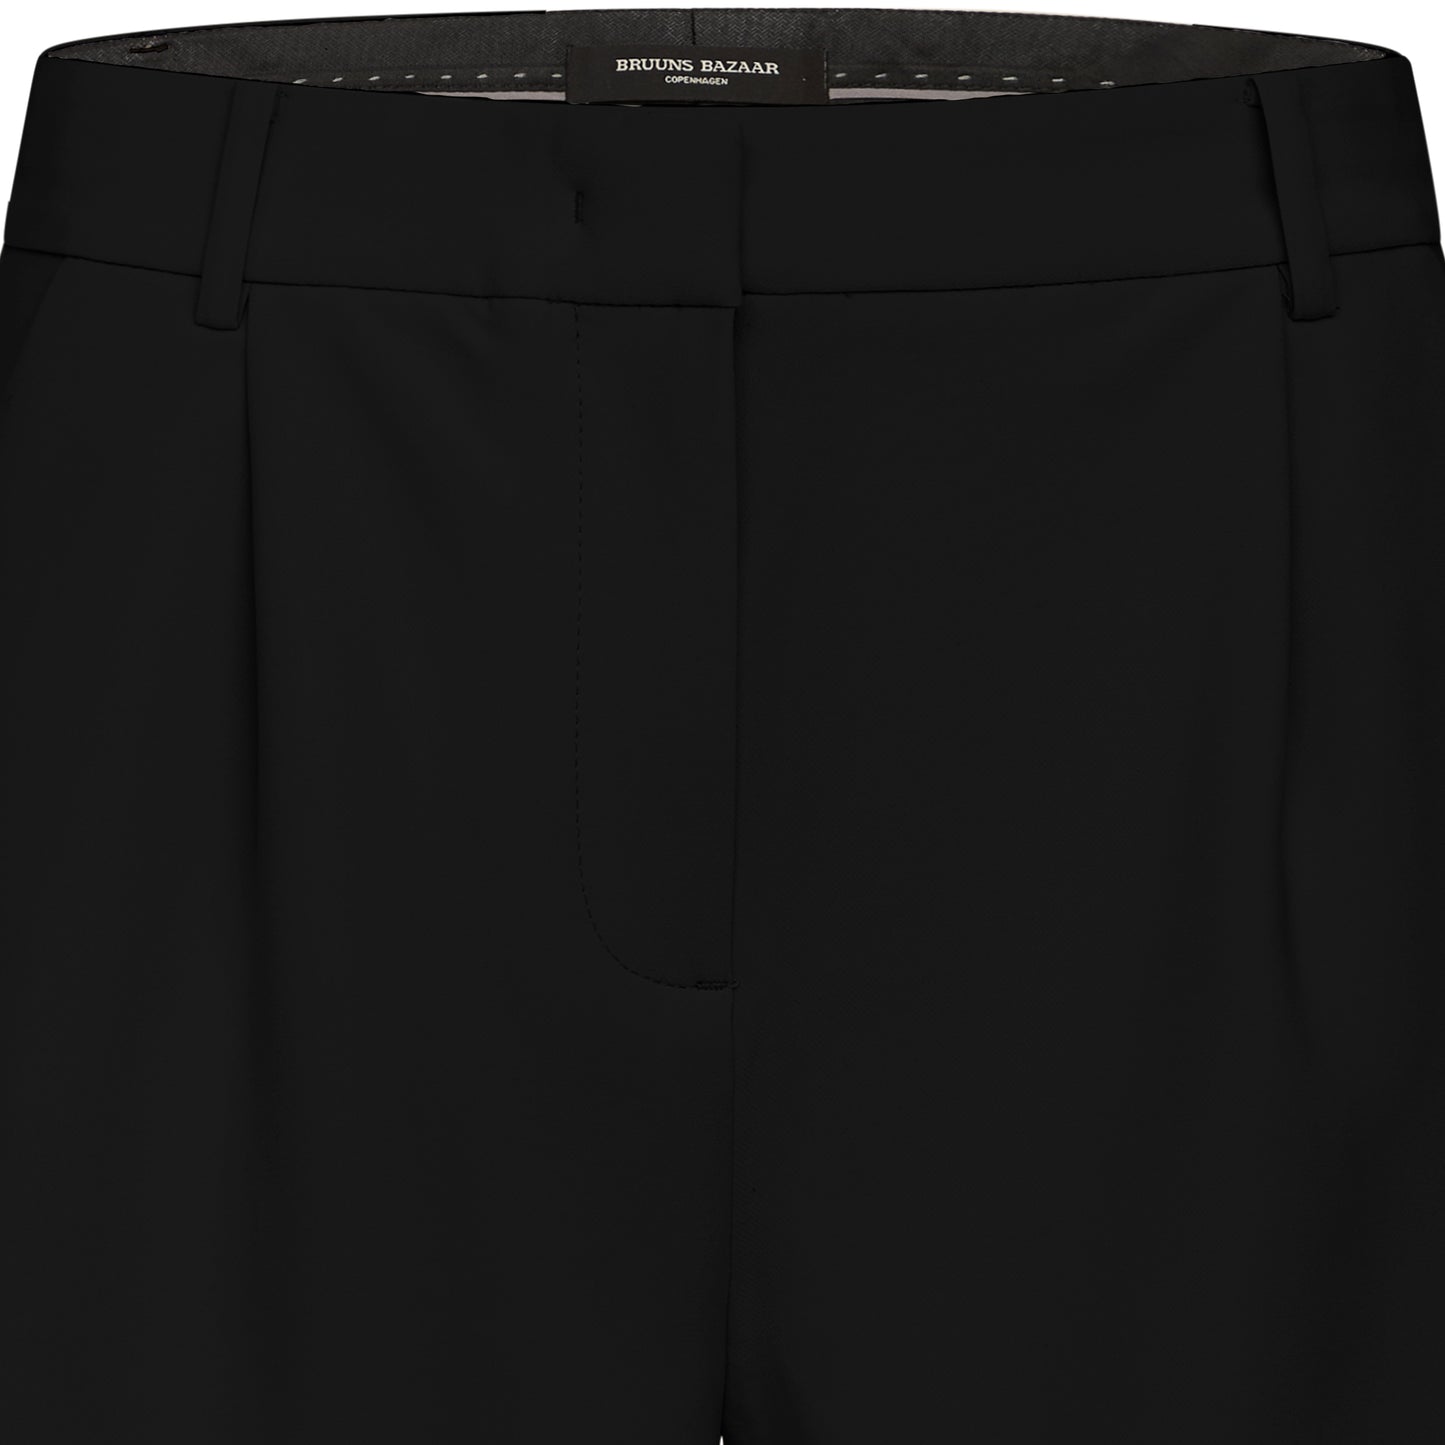 Bruuns Bazaar Women - BrassicaBBWinnas shorts - Black